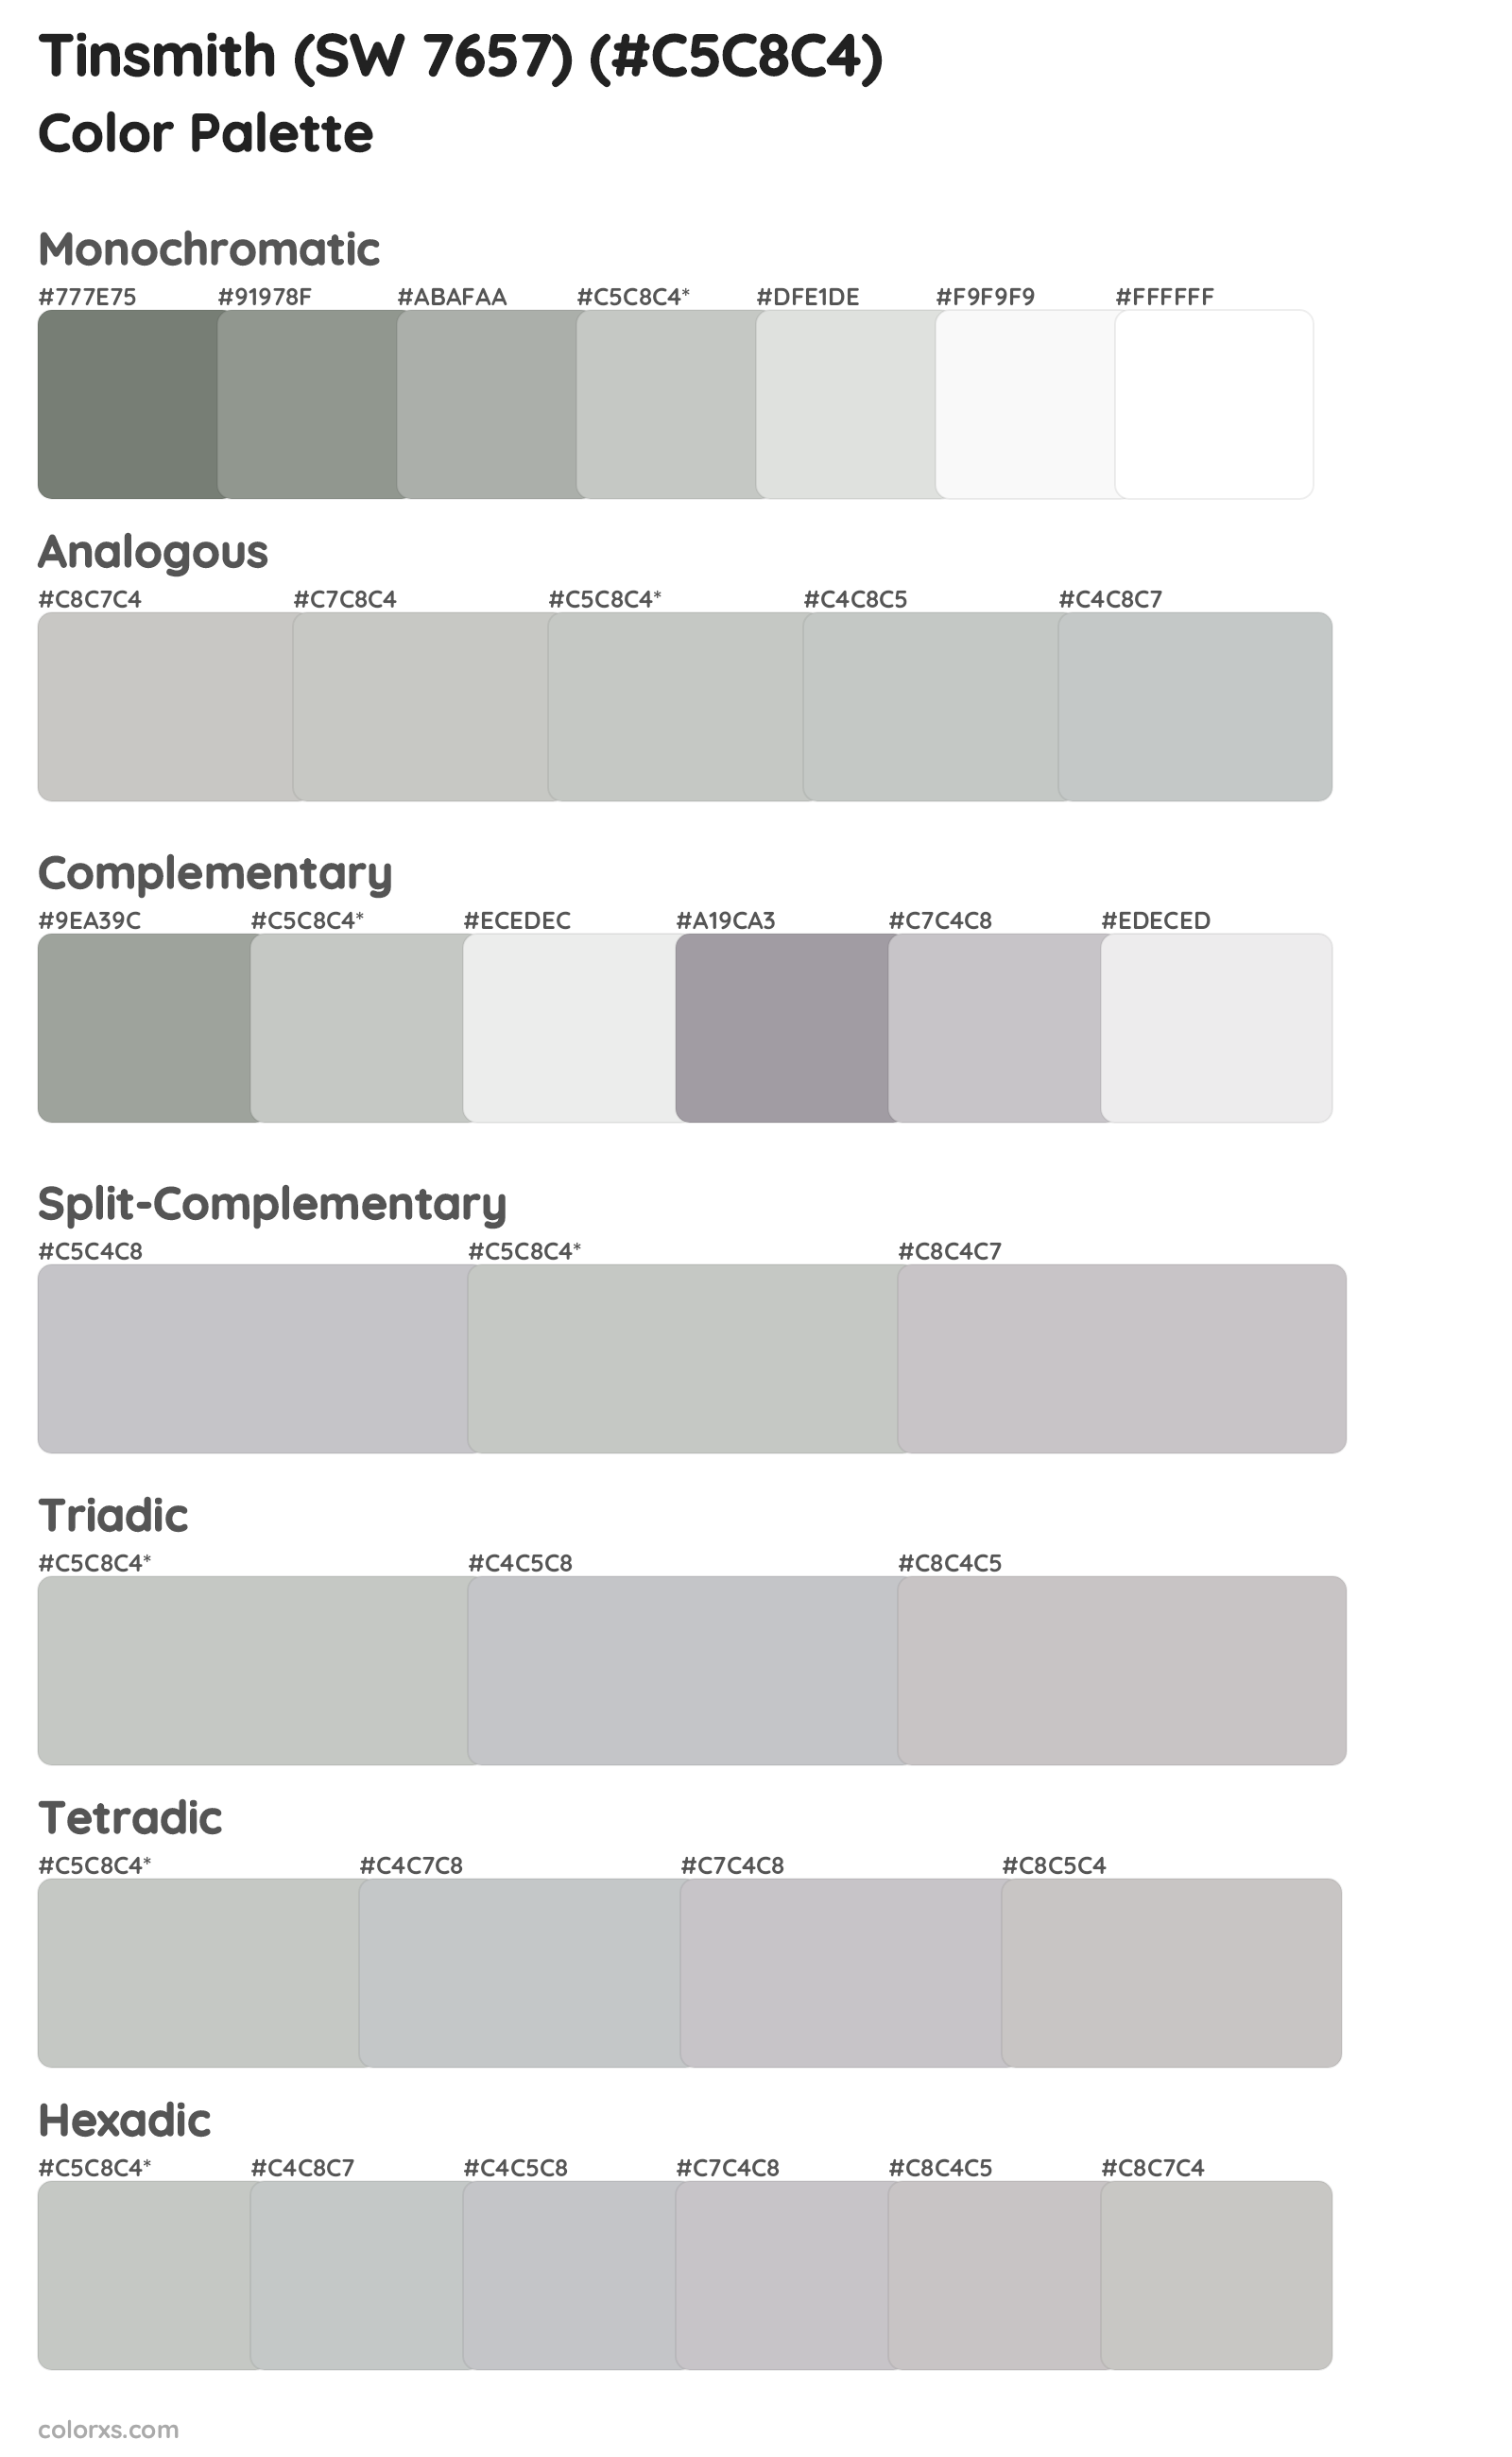 Tinsmith (SW 7657) Color Scheme Palettes